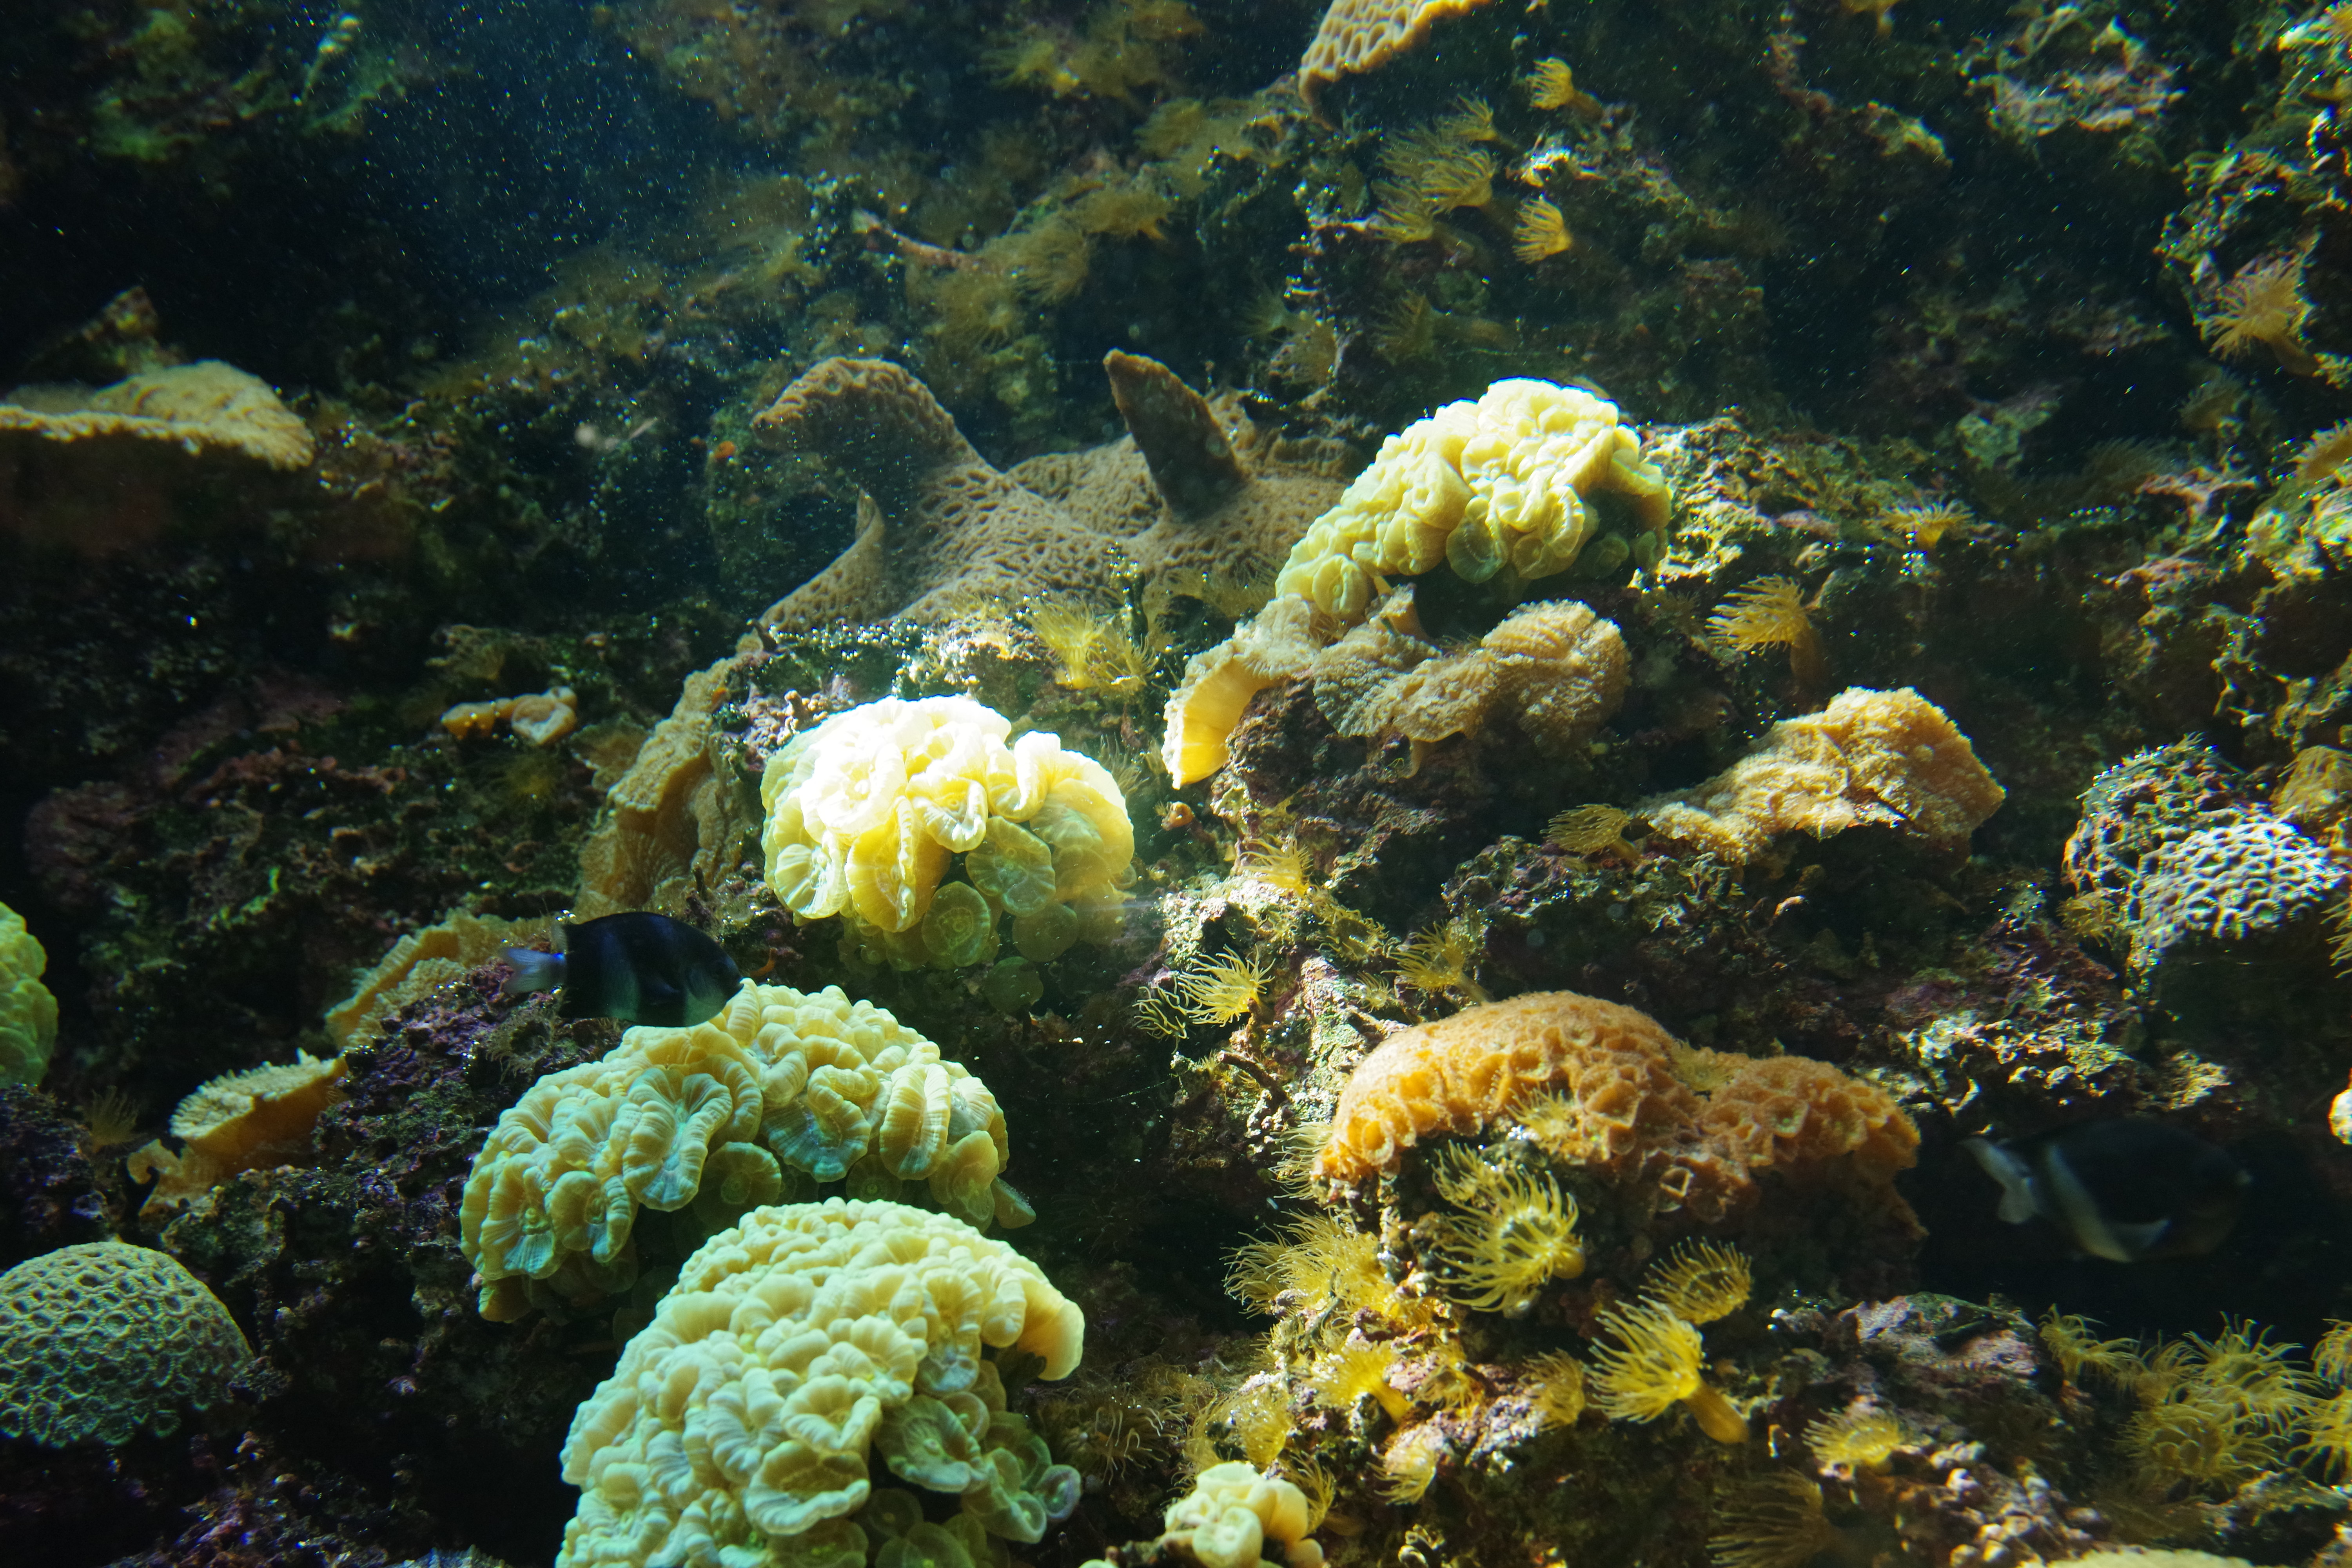 88233 descargar imagen naturaleza, agua, coral, mundo submarino, algas marinas, algas: fondos de pantalla y protectores de pantalla gratis